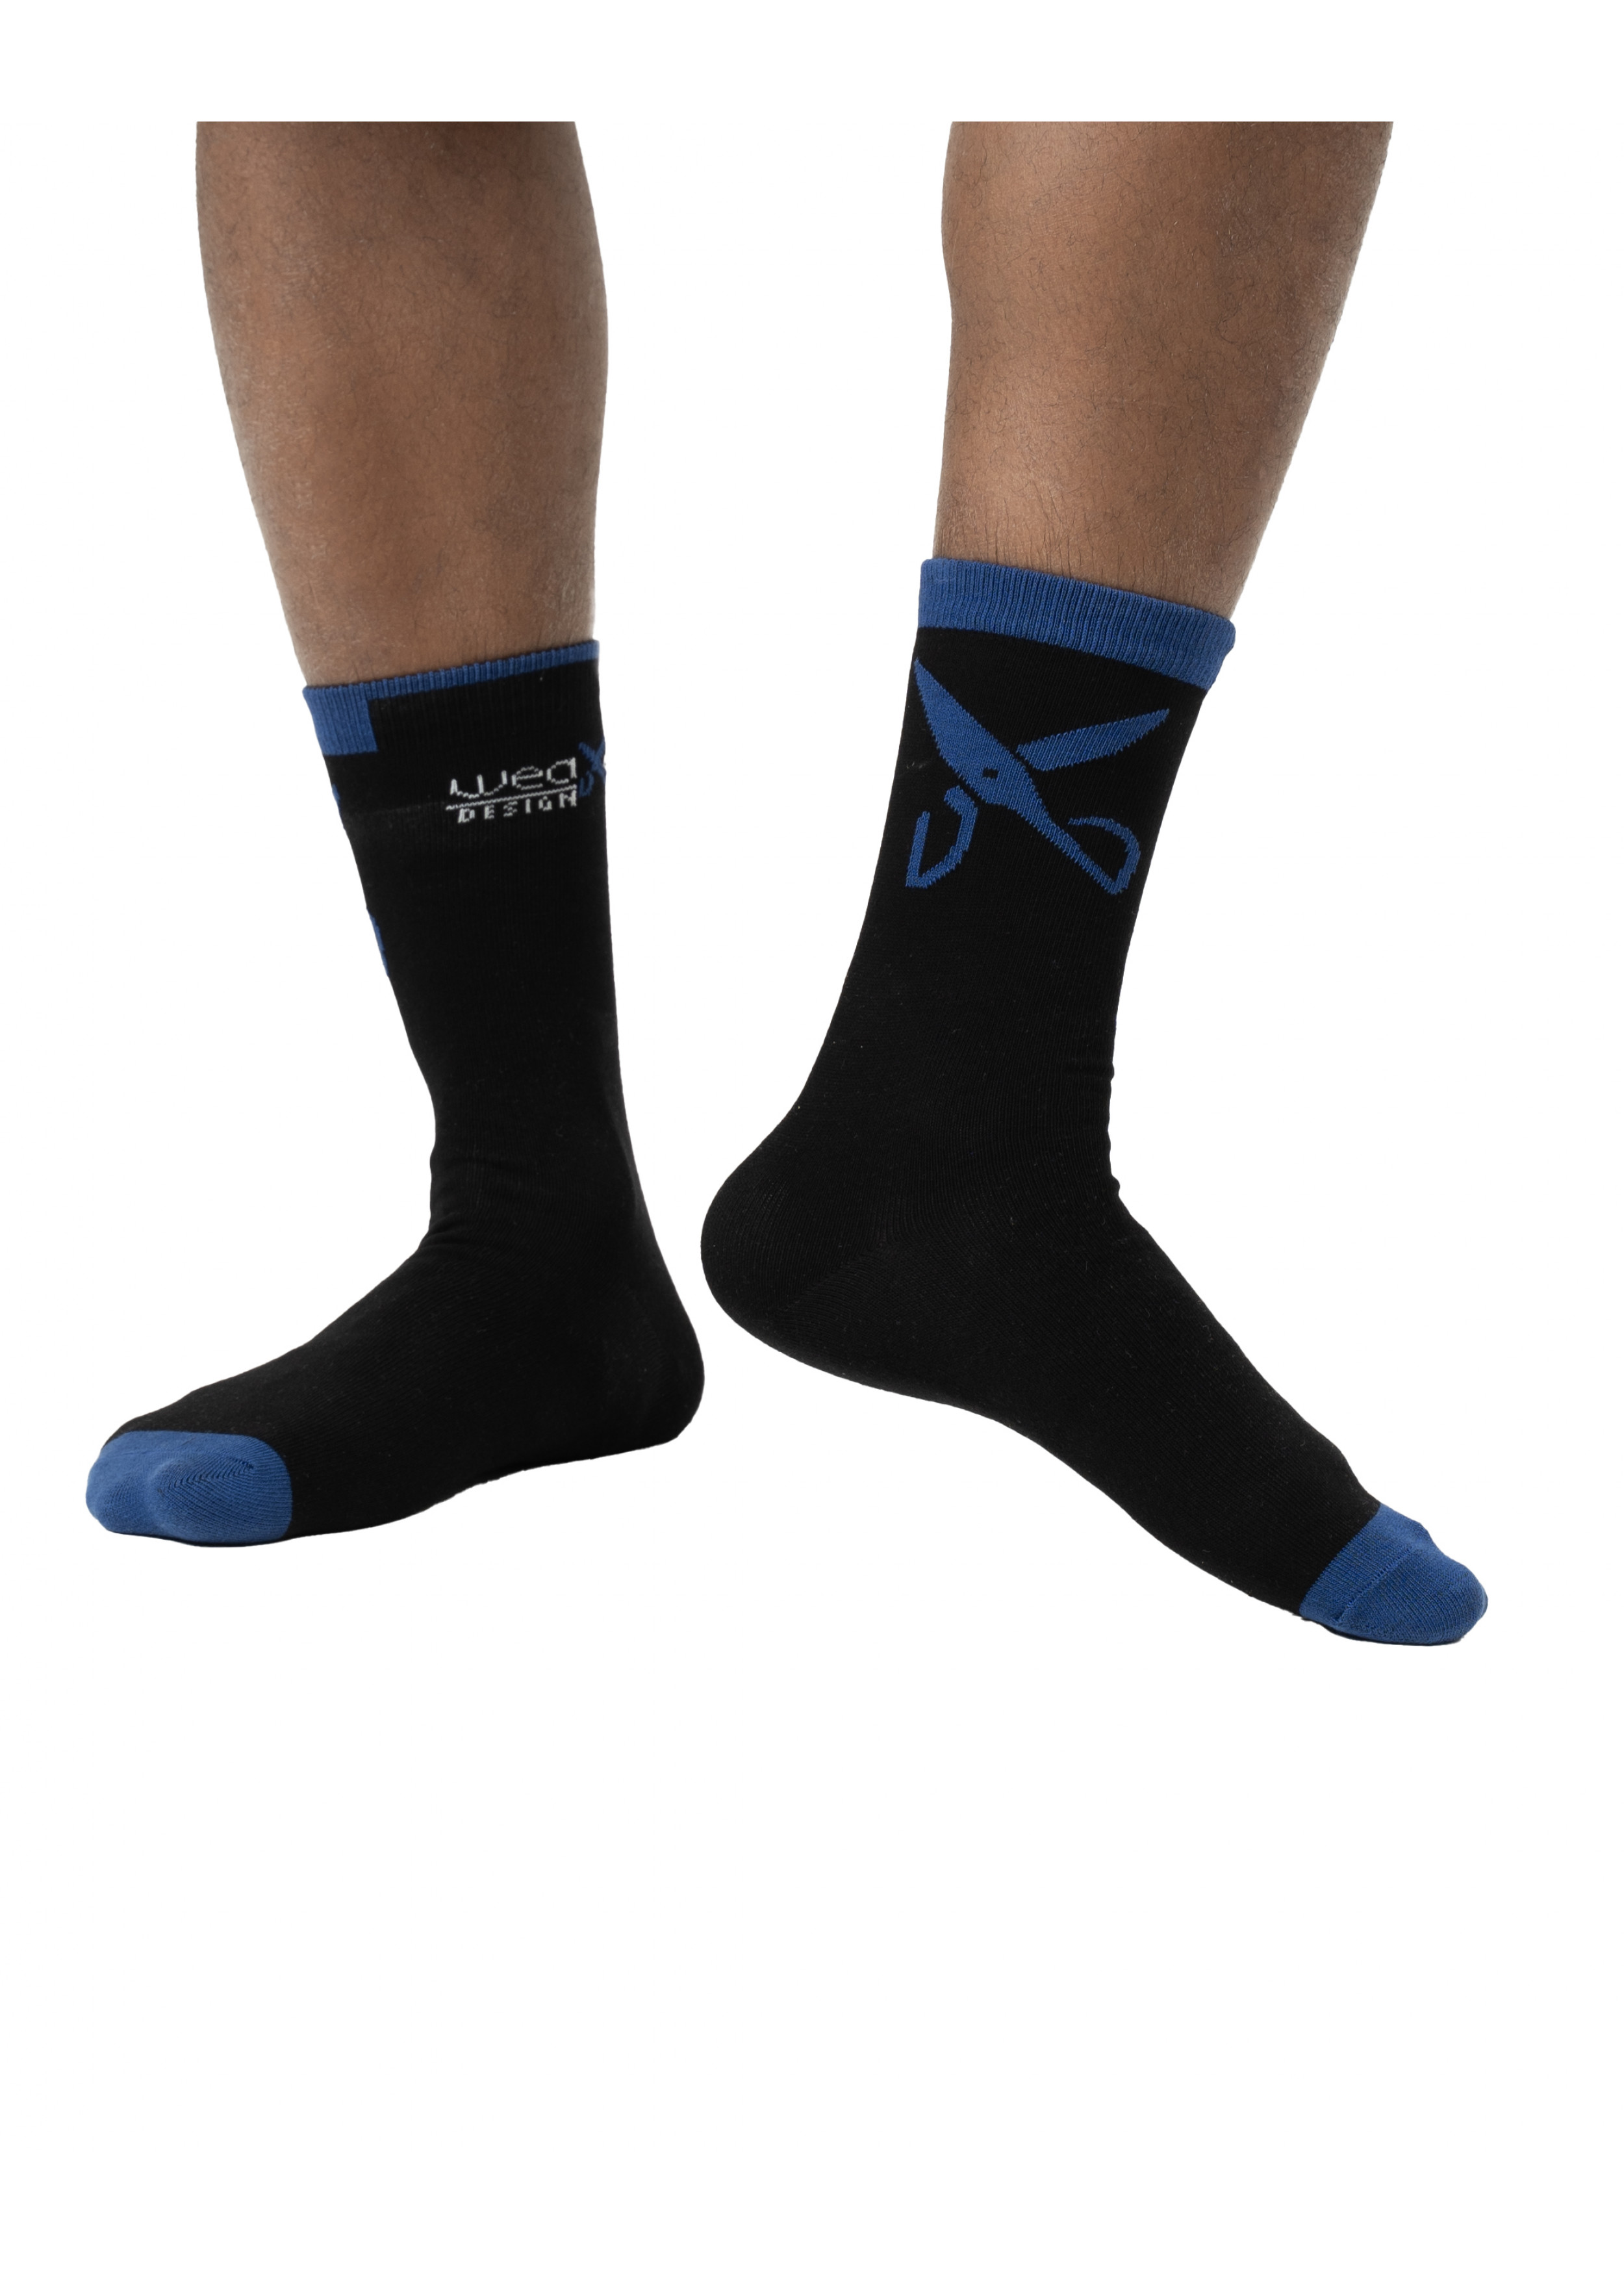 Plain Socks - Black / Blue